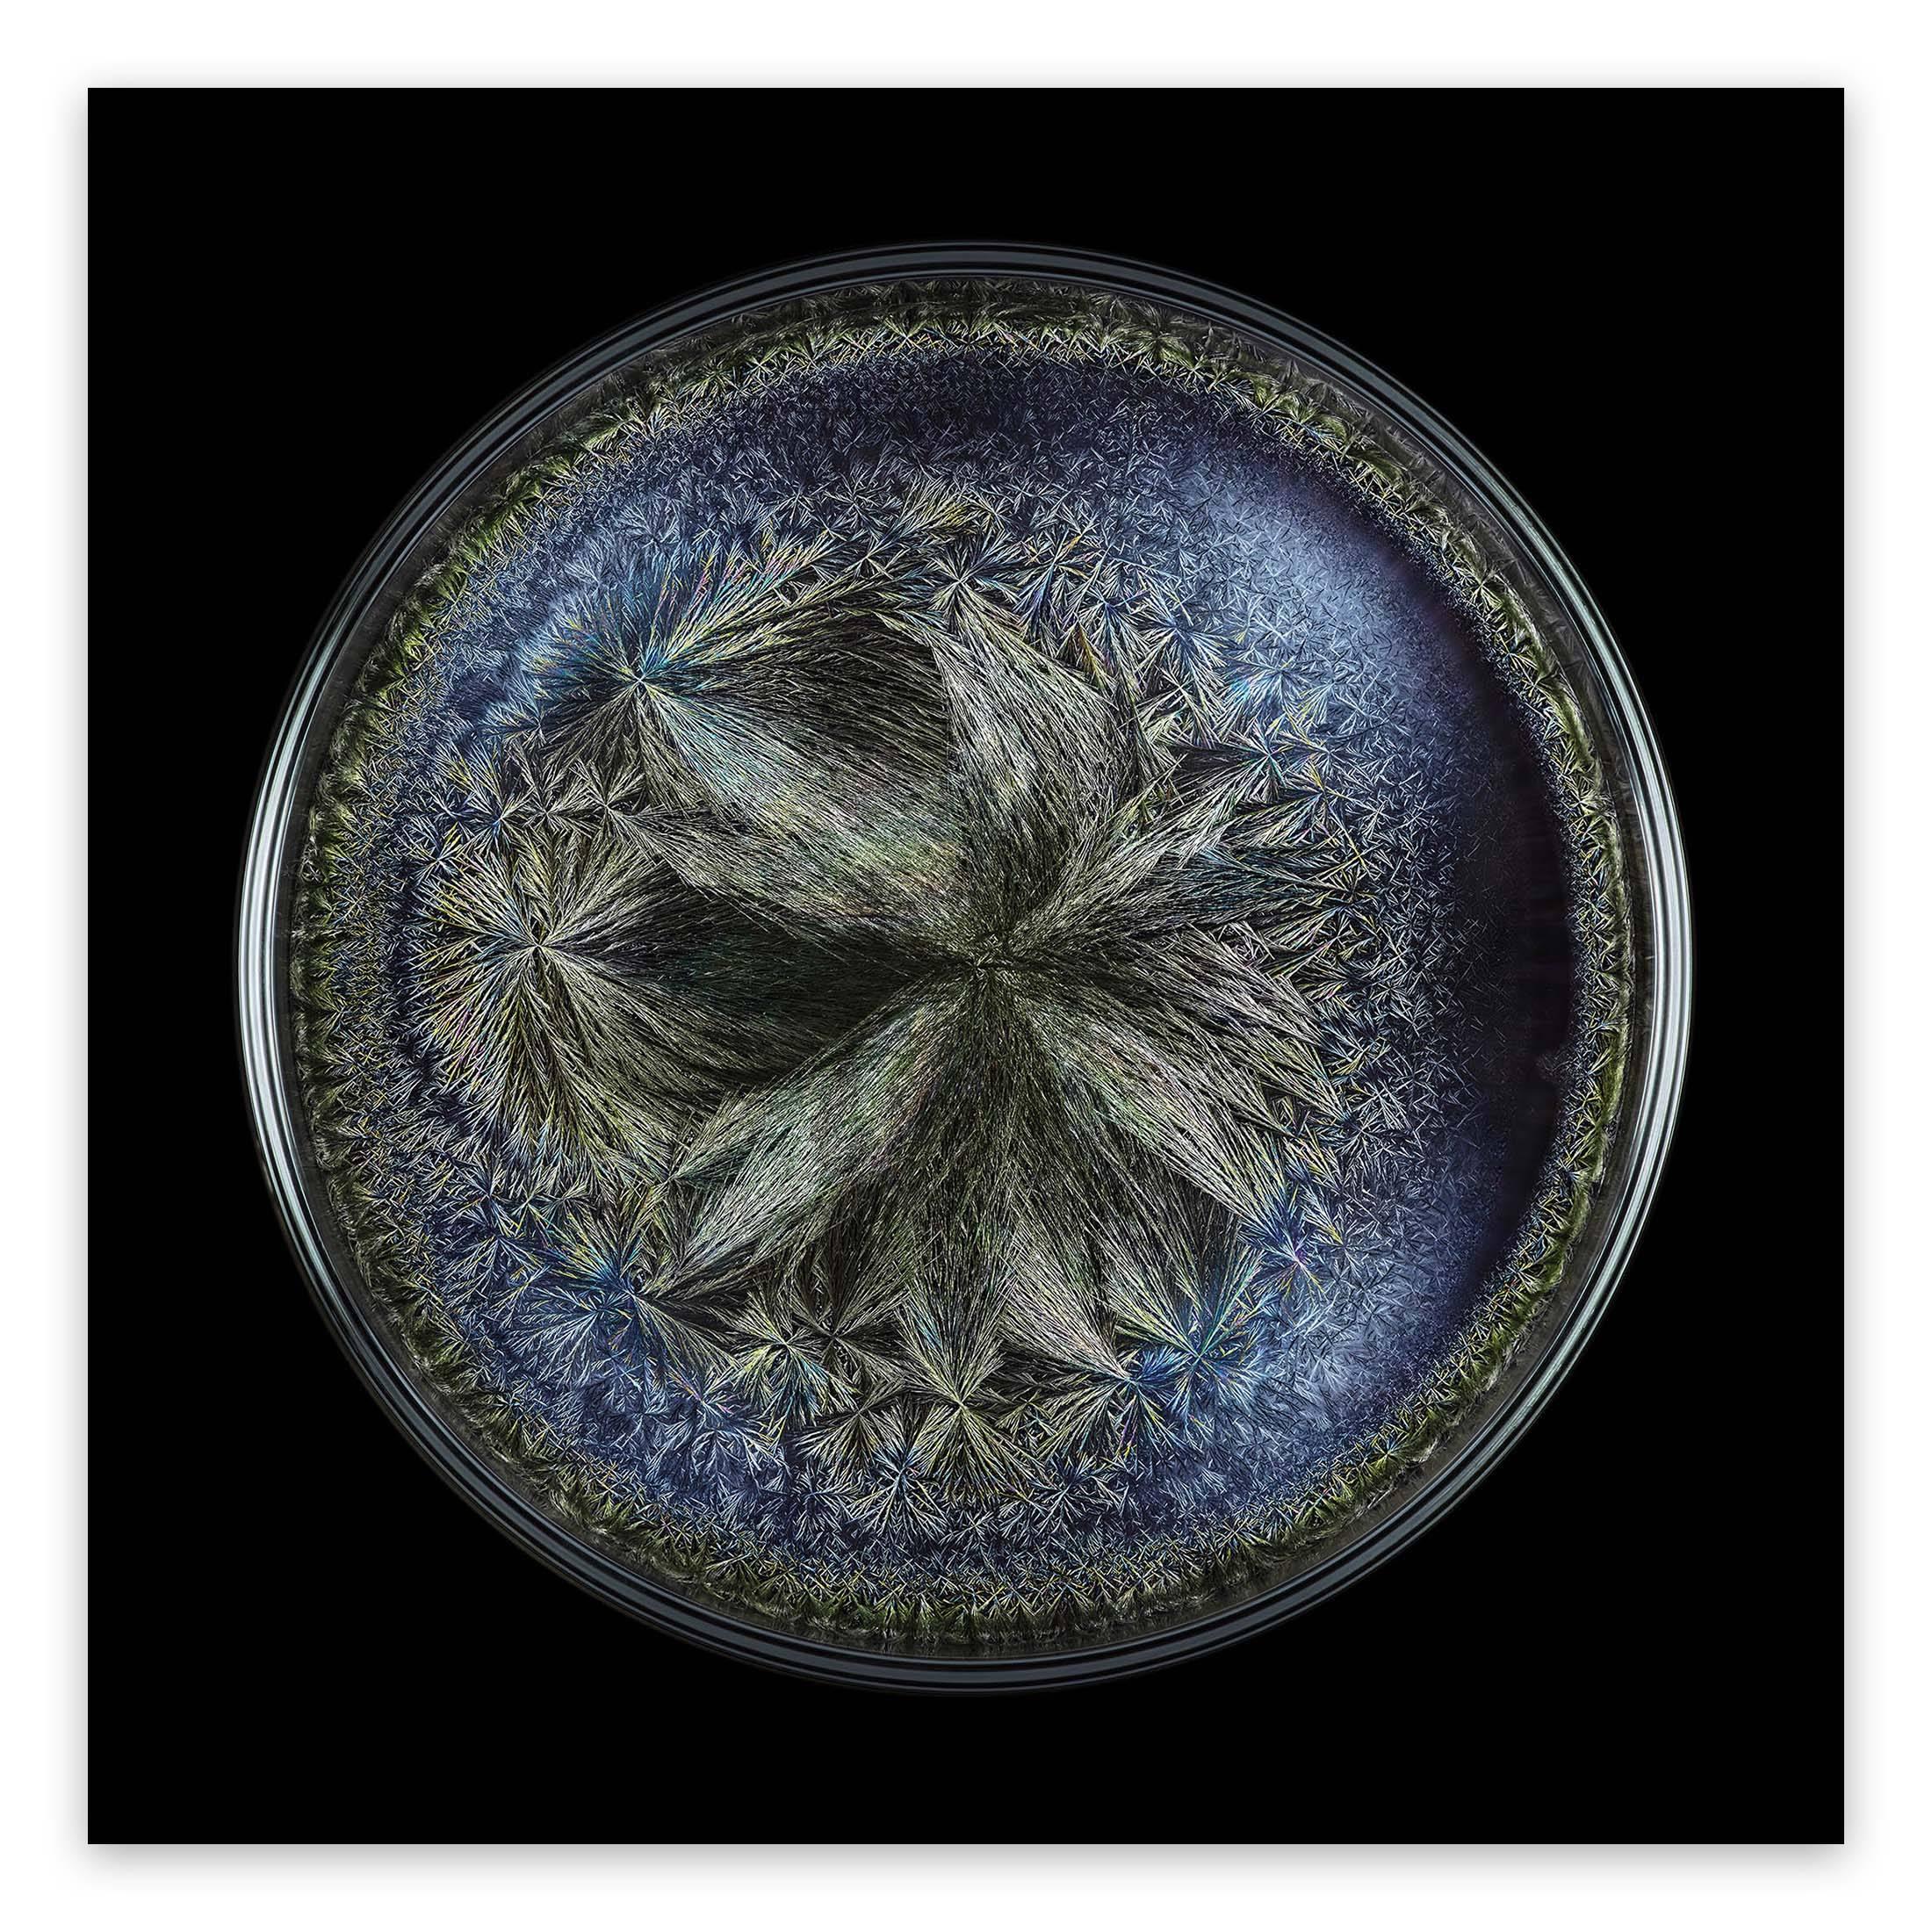 Seb Janiak Color Photograph - Morphogenetic field - Beluga Caviar (Abstract Photography)